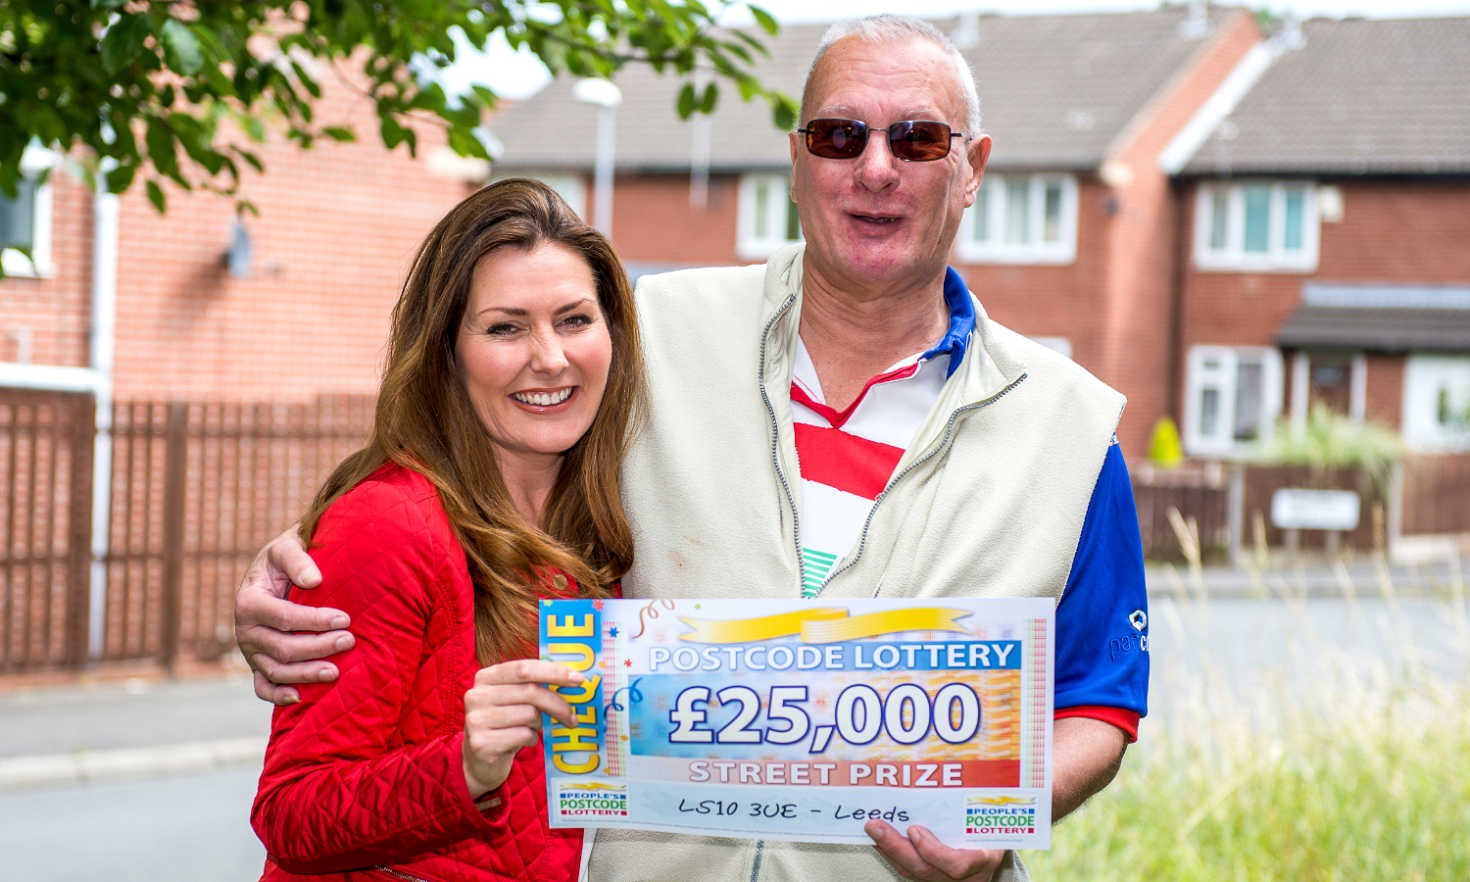 Brian Morris in Leeds was the lucky winner of £25,000 this weekend